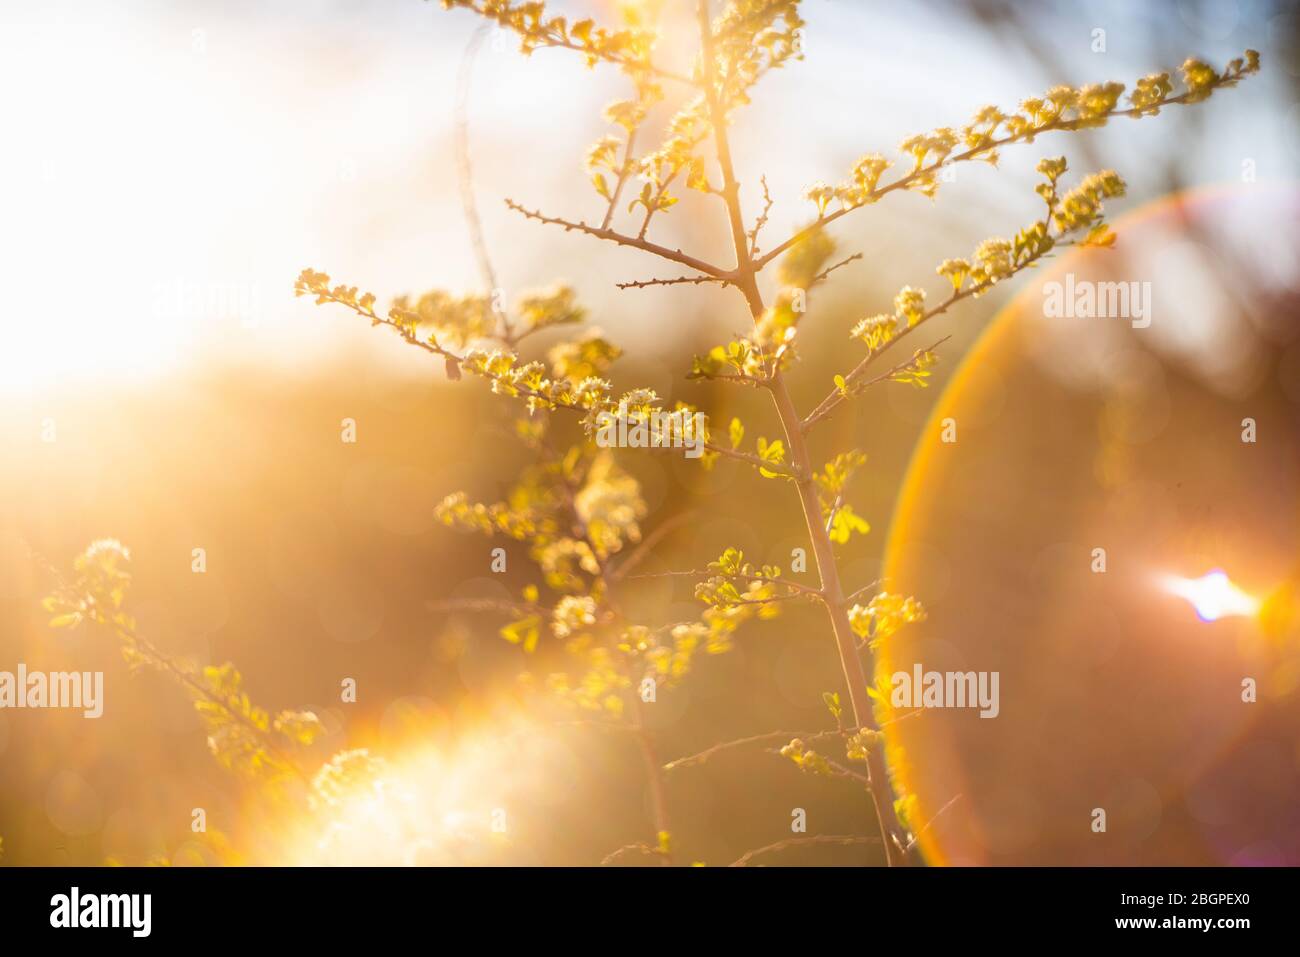 Plants at sunset, background Stock Photo